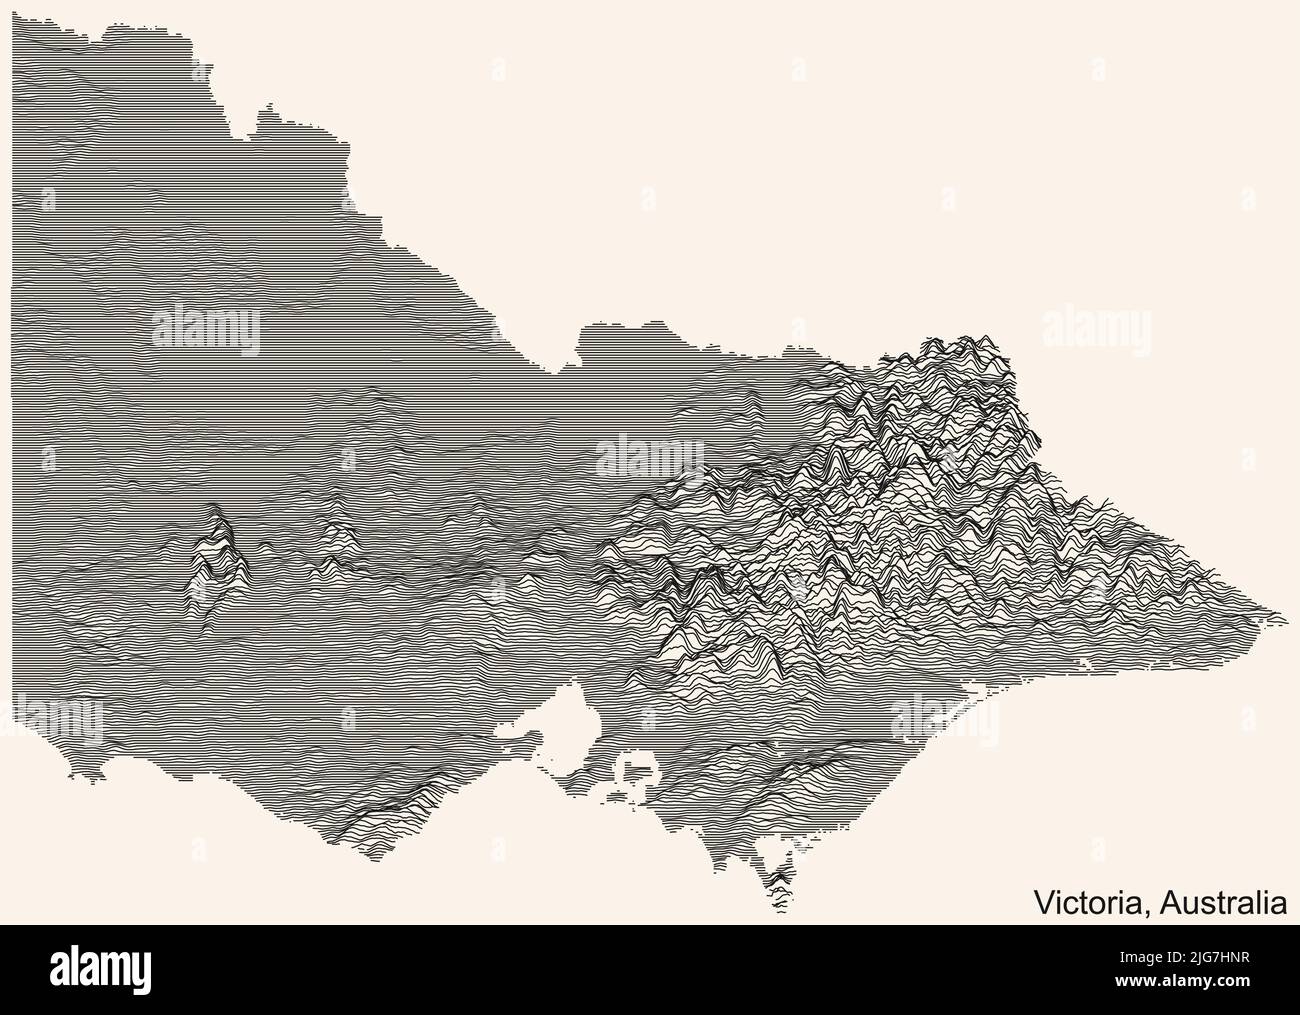 Topographic Relief Map Of Victoria Australia 2JG7HNR 